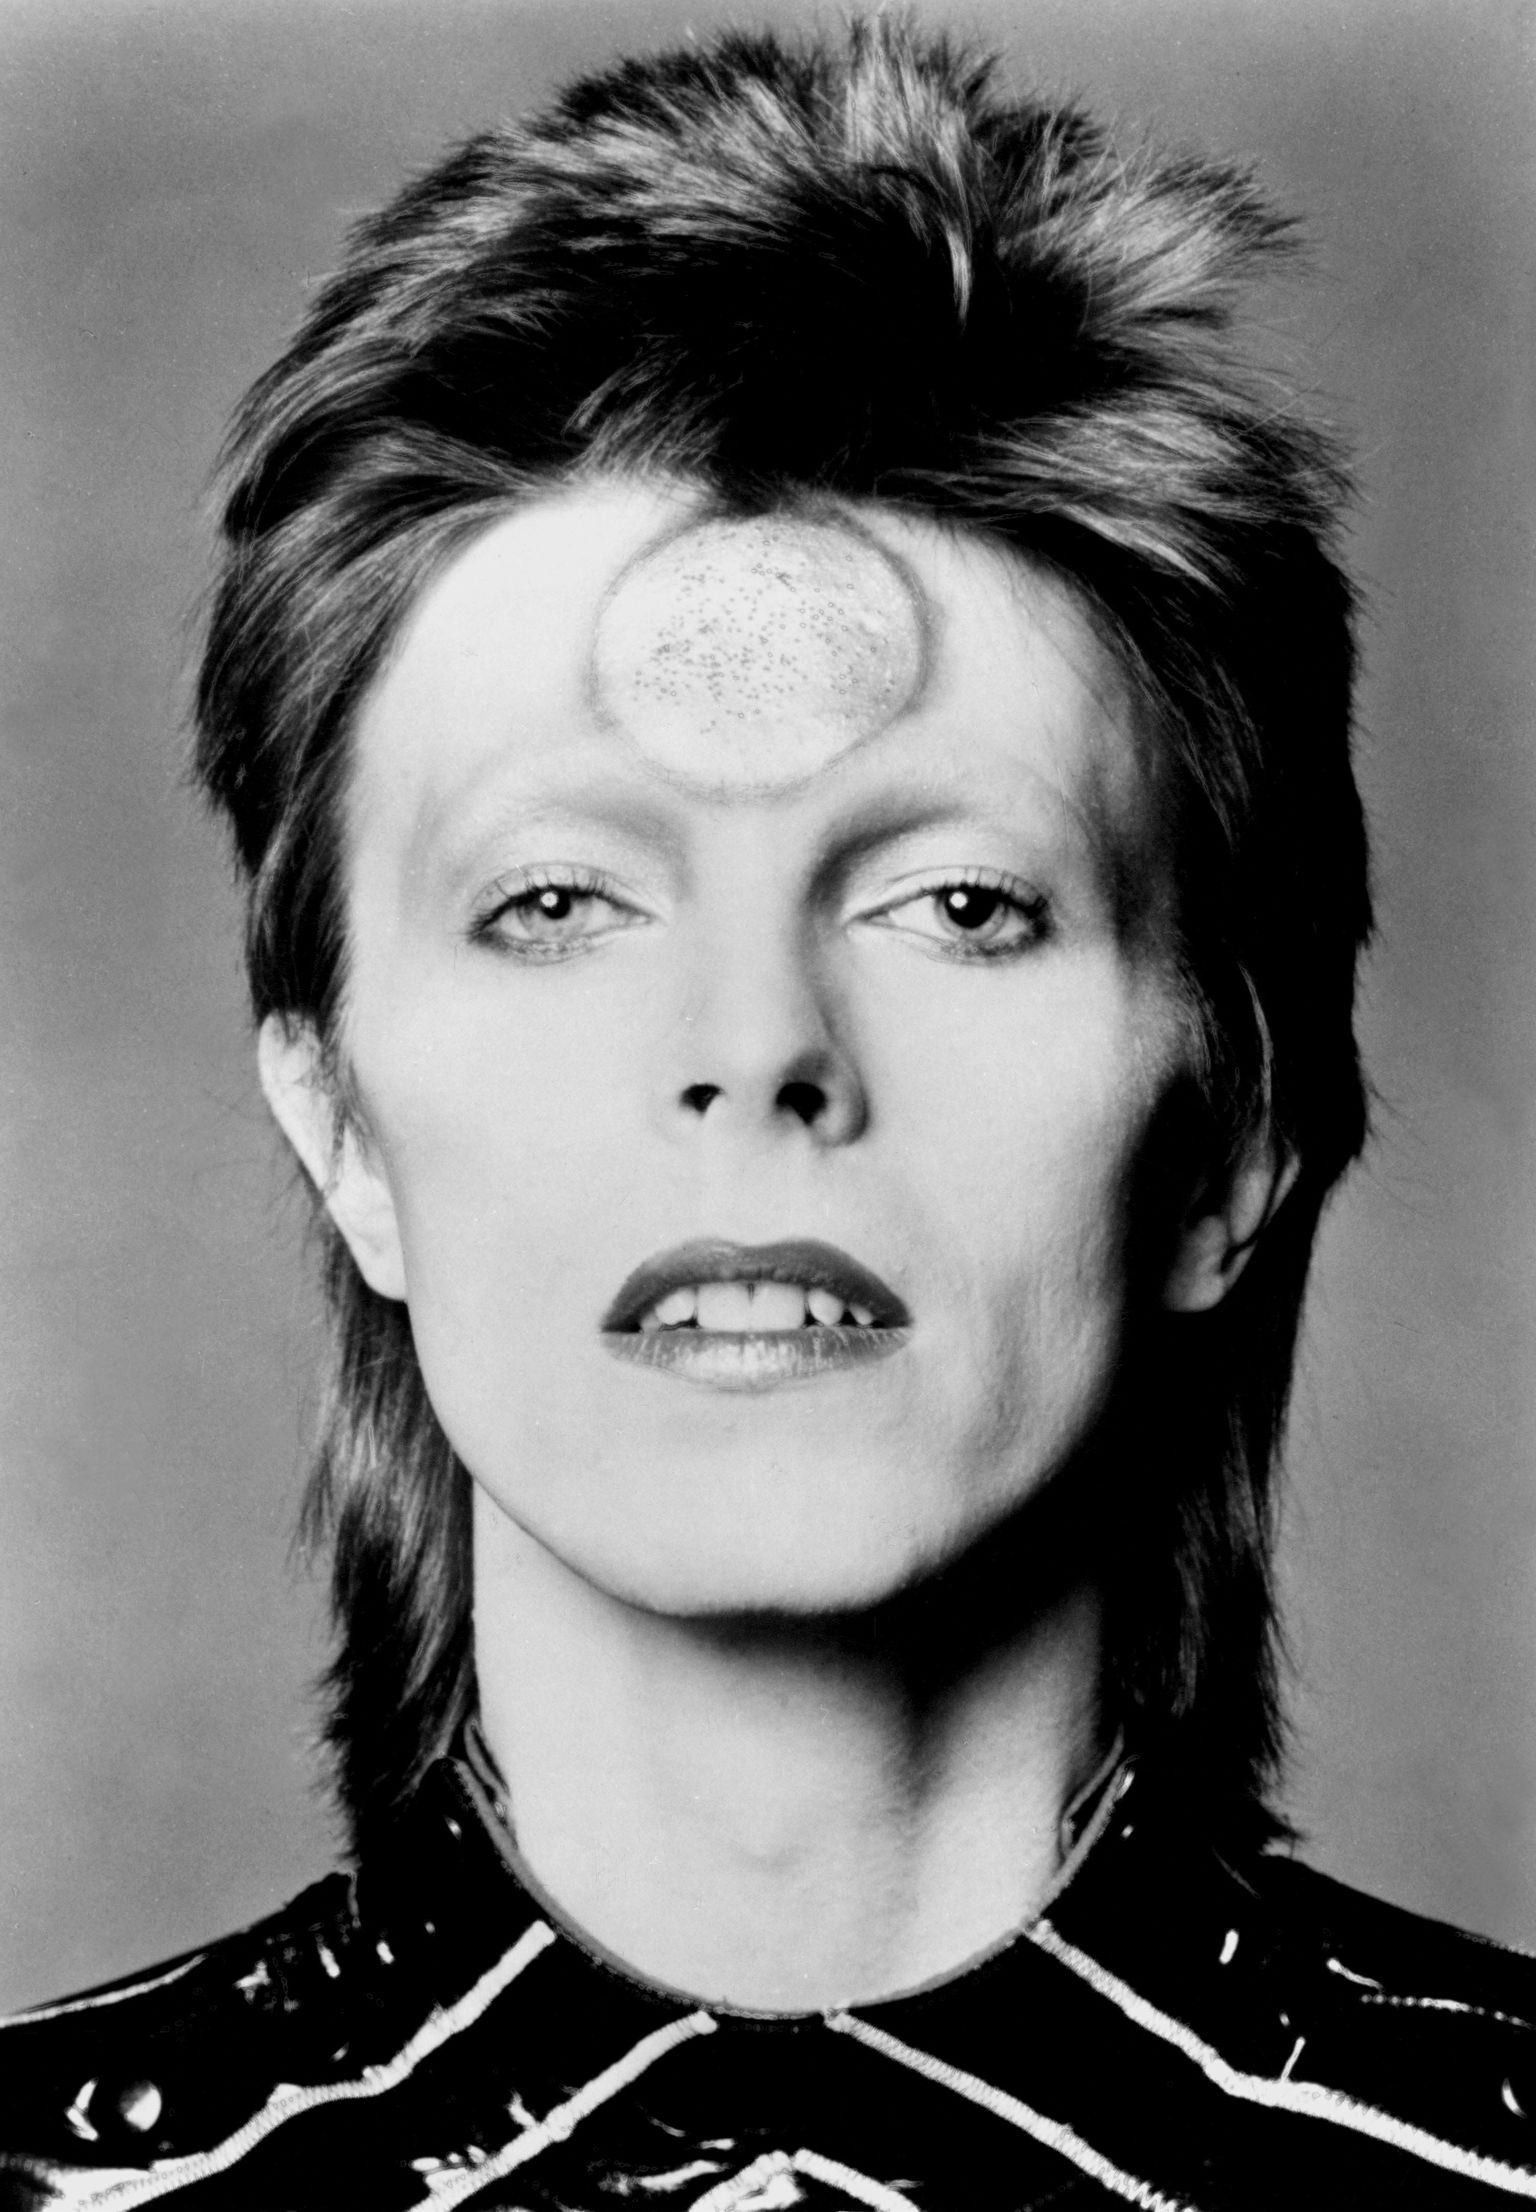 David Bowie. 1975.